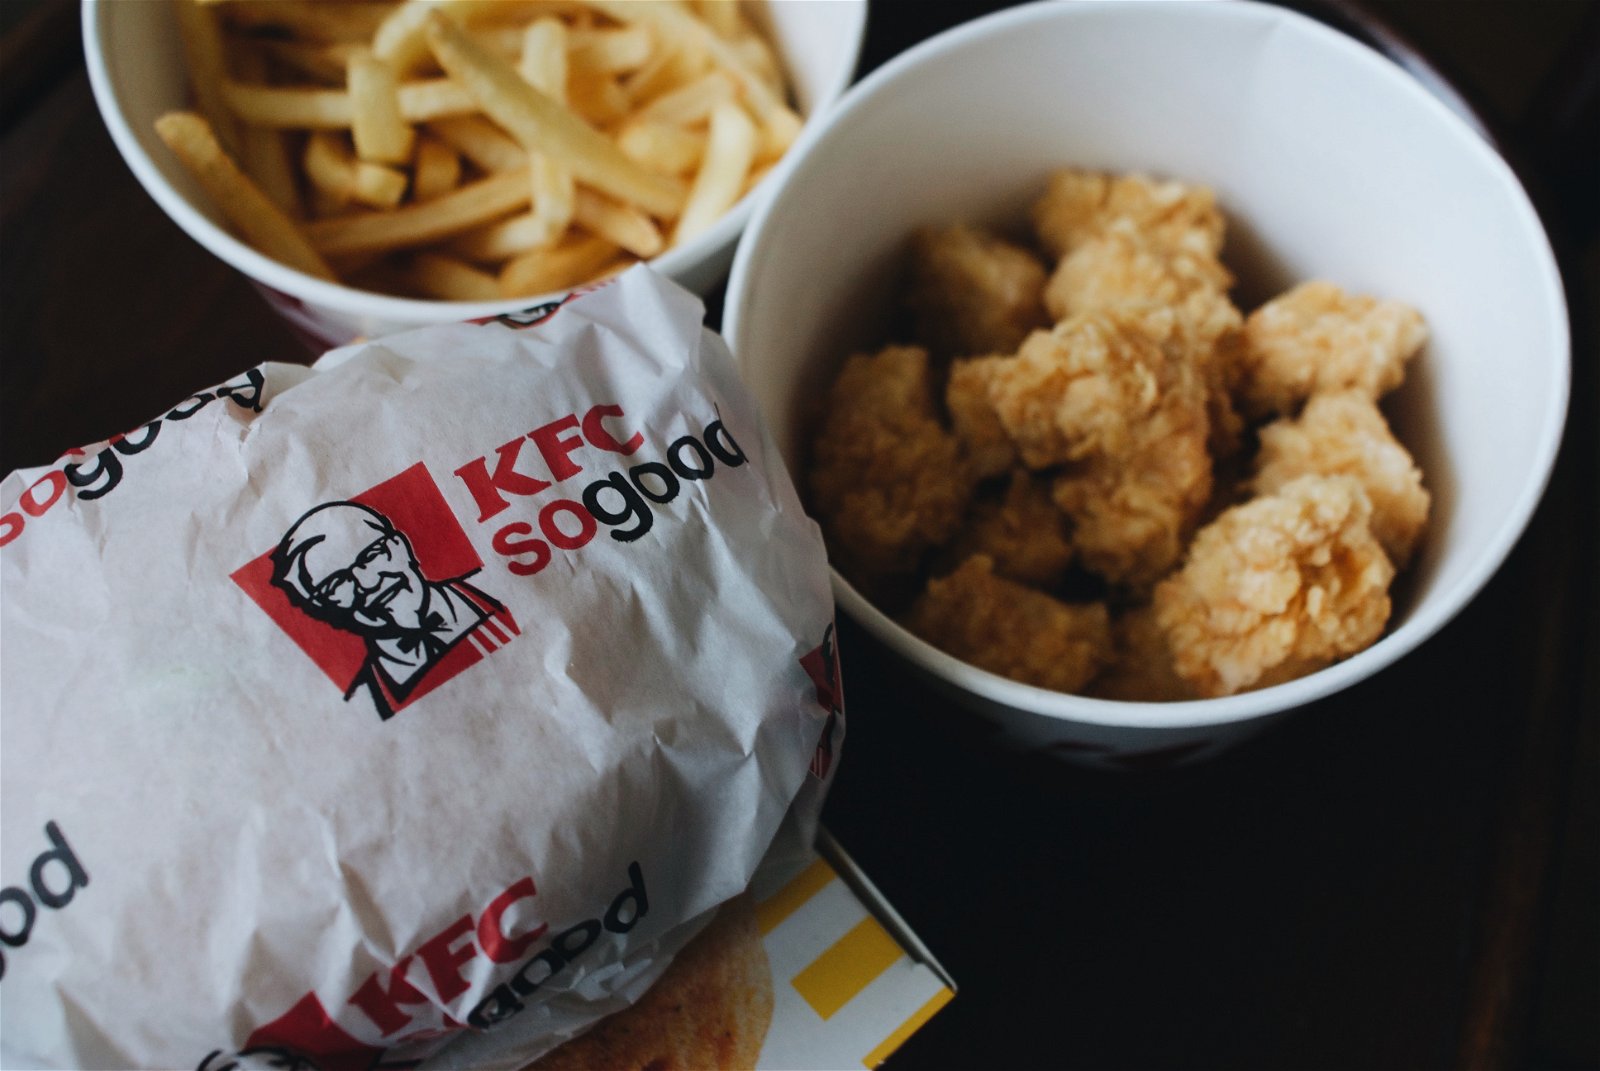 Notorious serial killer John Wayne Gacy ordered KFC as his last meal request on death row.